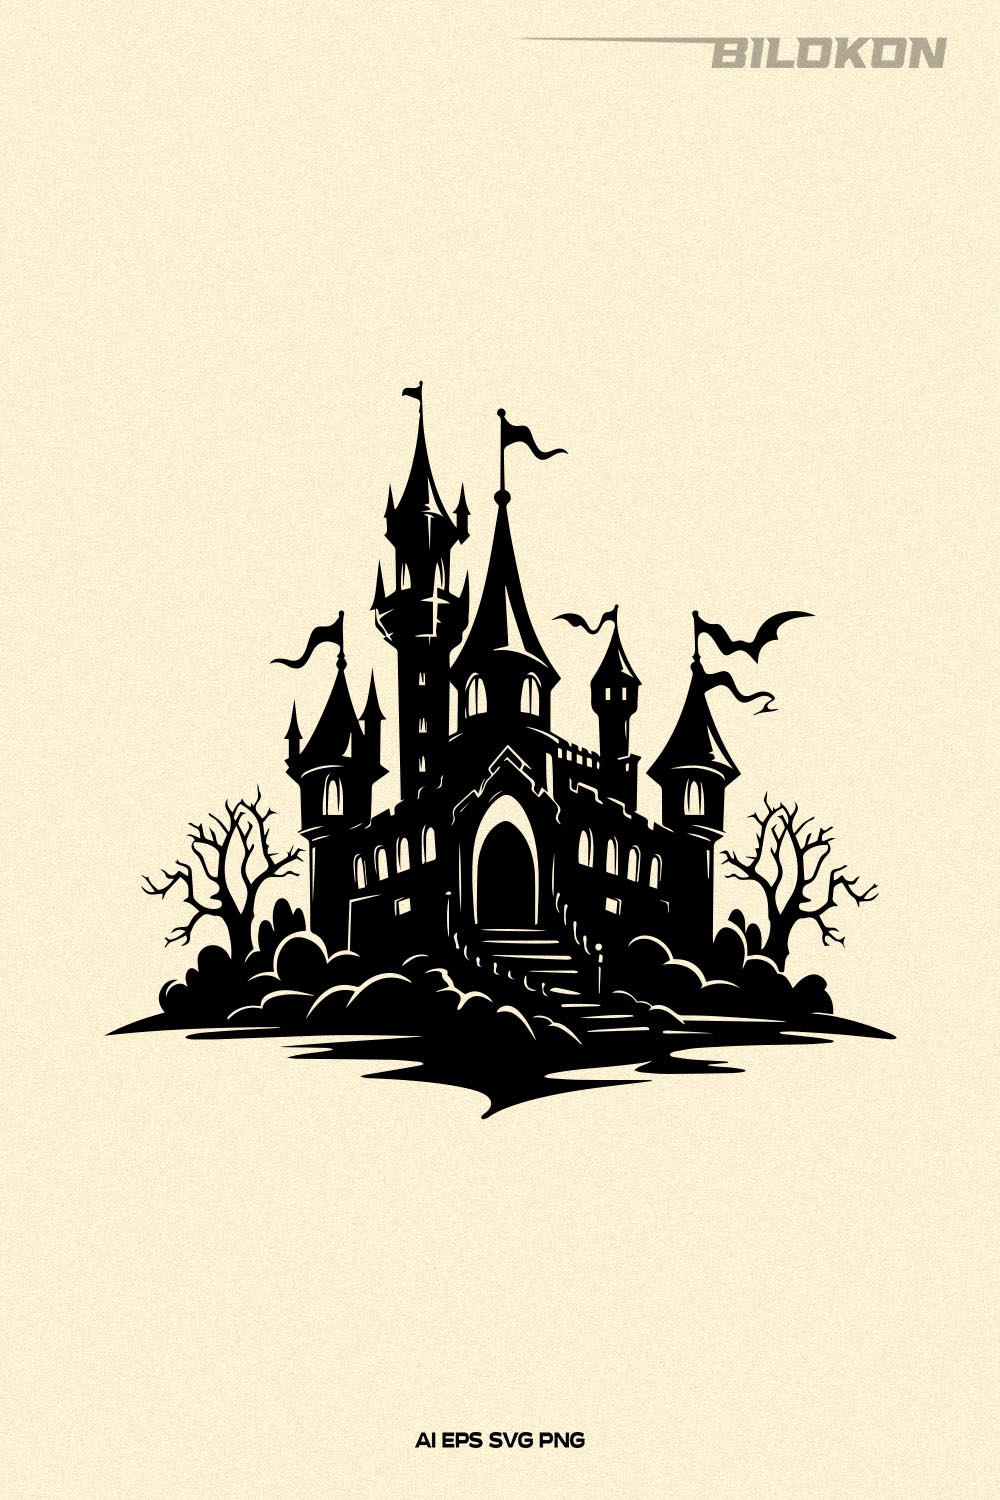 Halloween spooky castle, Halloween SVG pinterest preview image.